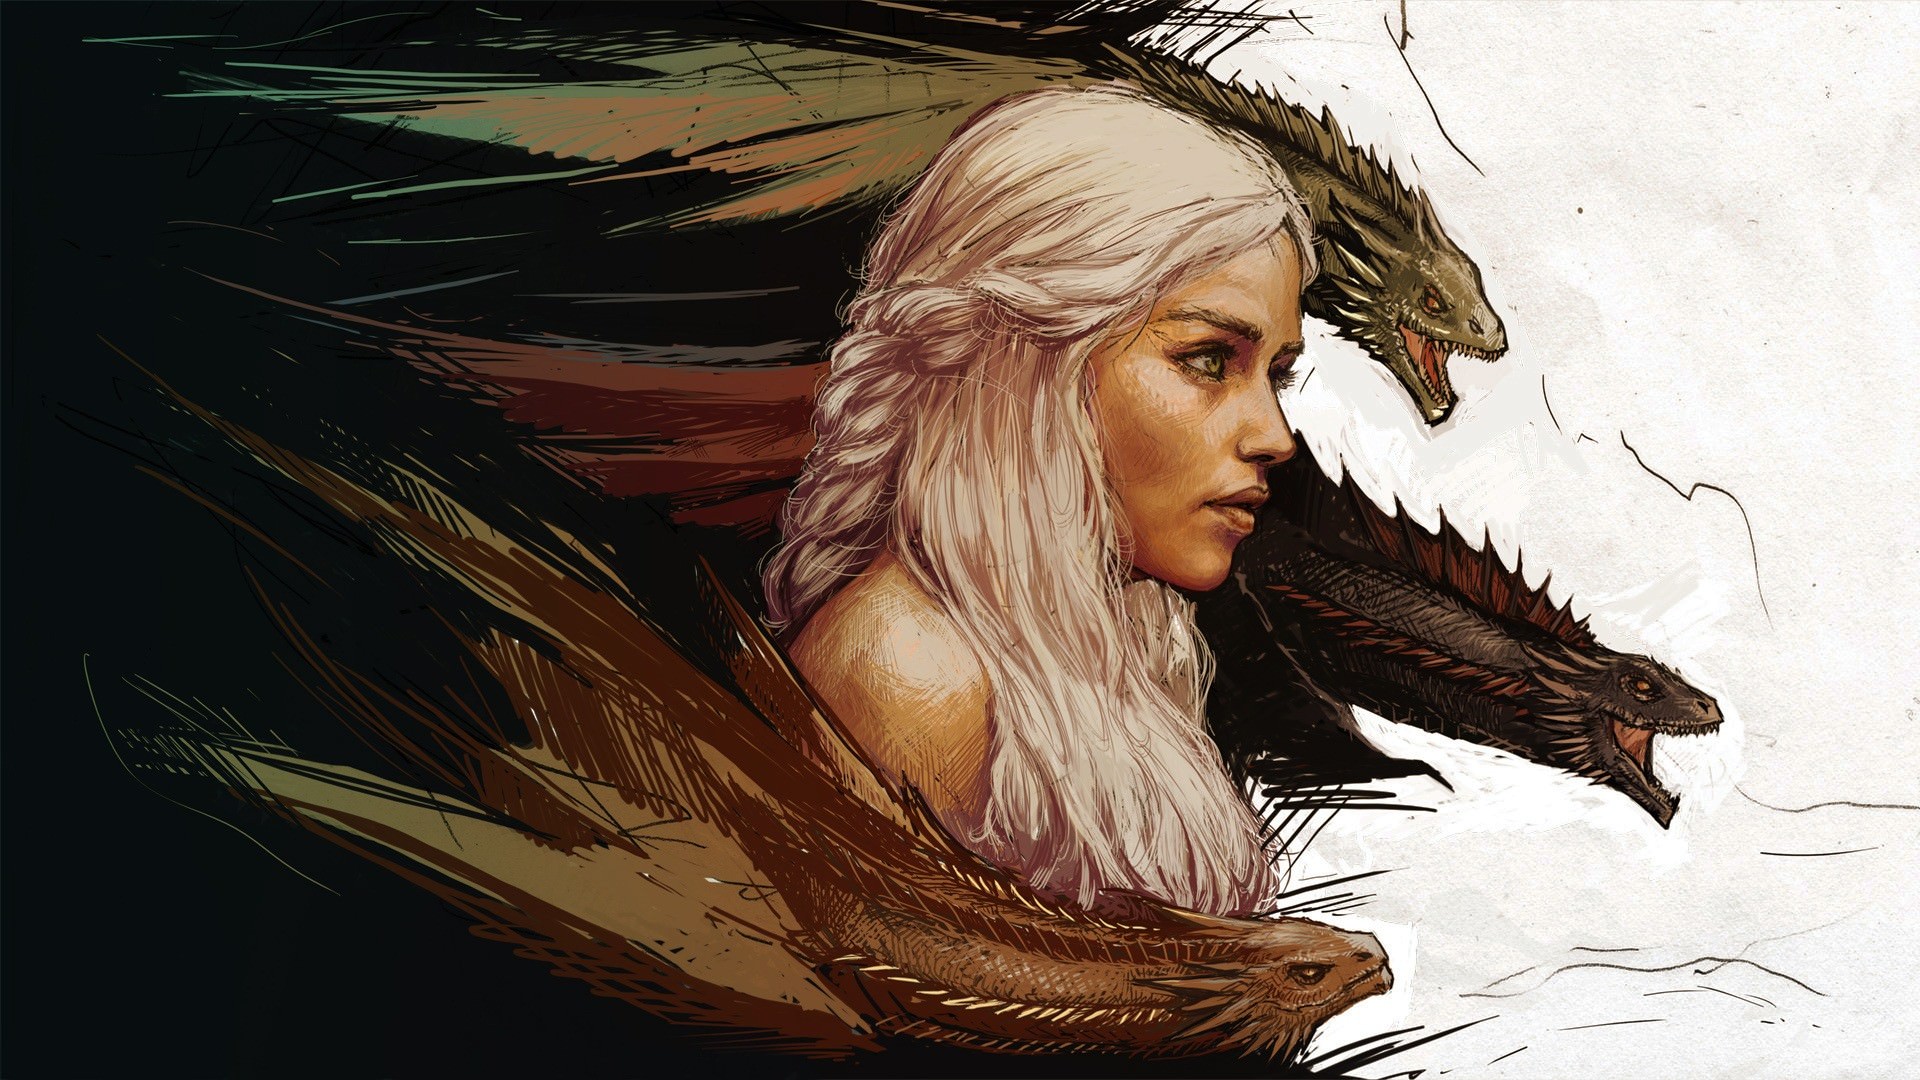 Wallpaper Game of thrones, Khaleesi - Daenerys Targaryen